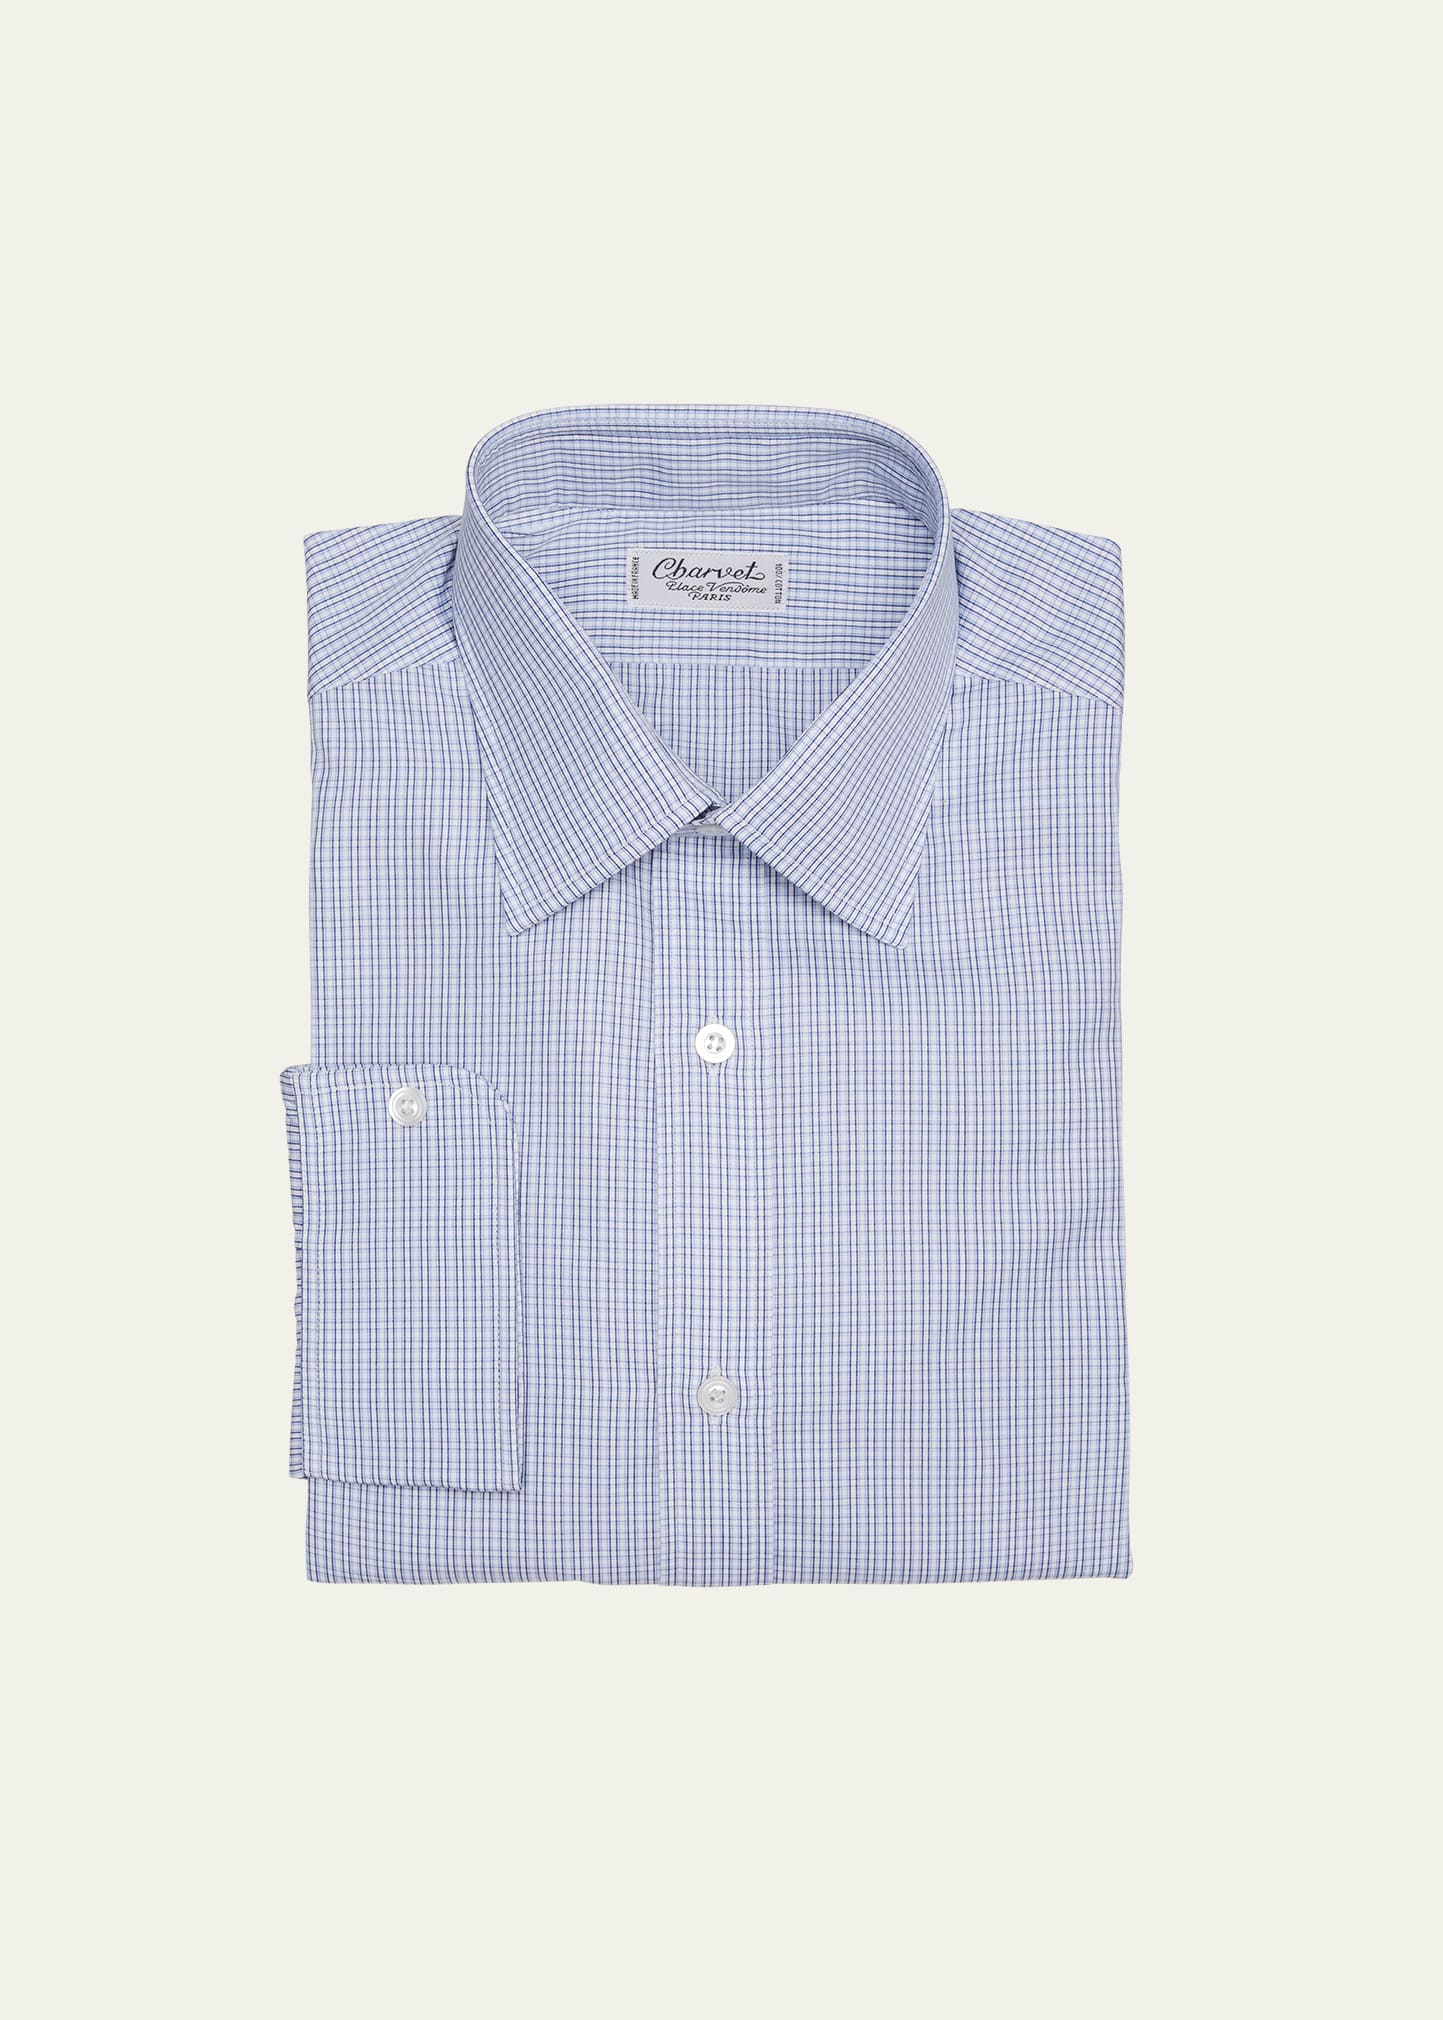 Charvet Men's Micro-check Cotton Dress Shirt In Medium Blue